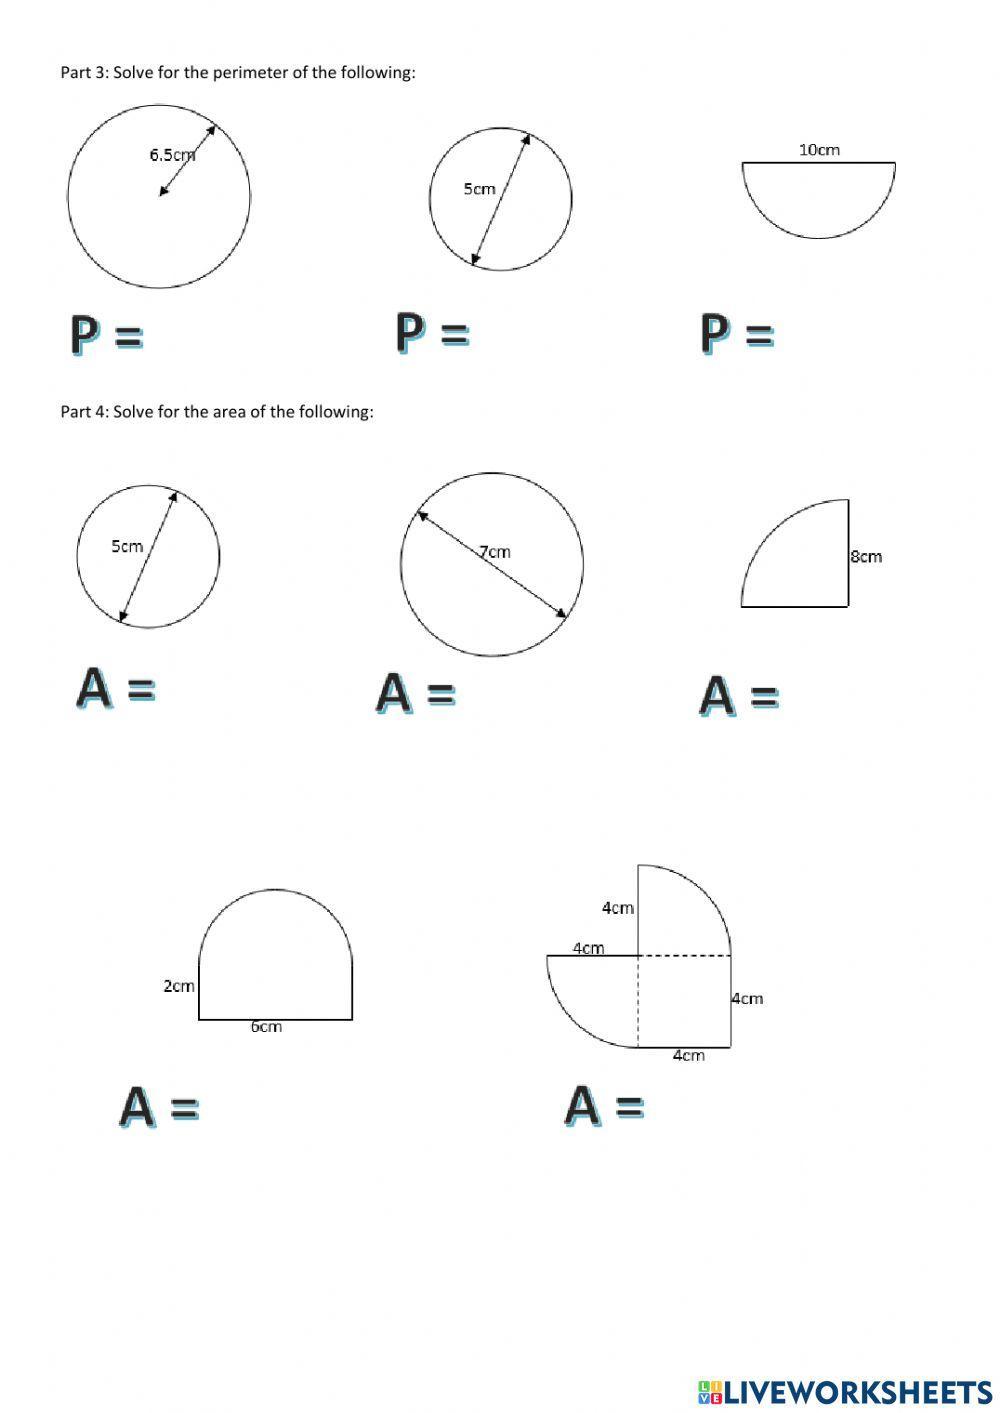 Parts, area, and perimeter of circles